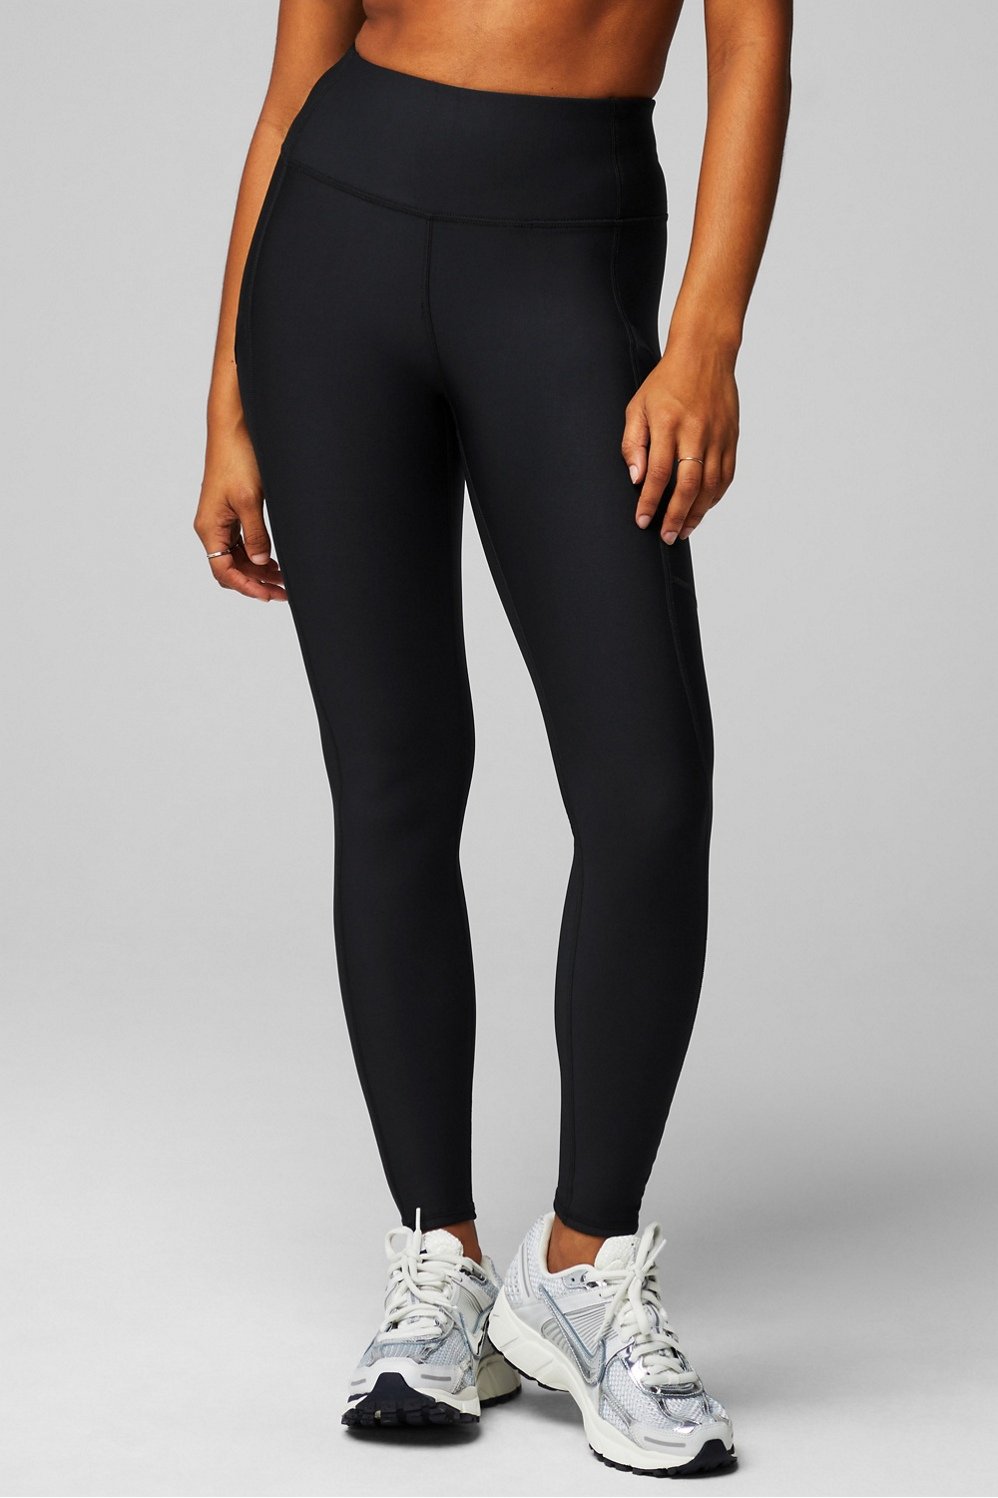 Glitich Leggings with pockets (deep pockets) black contrast waistband –  Fayah Athletics